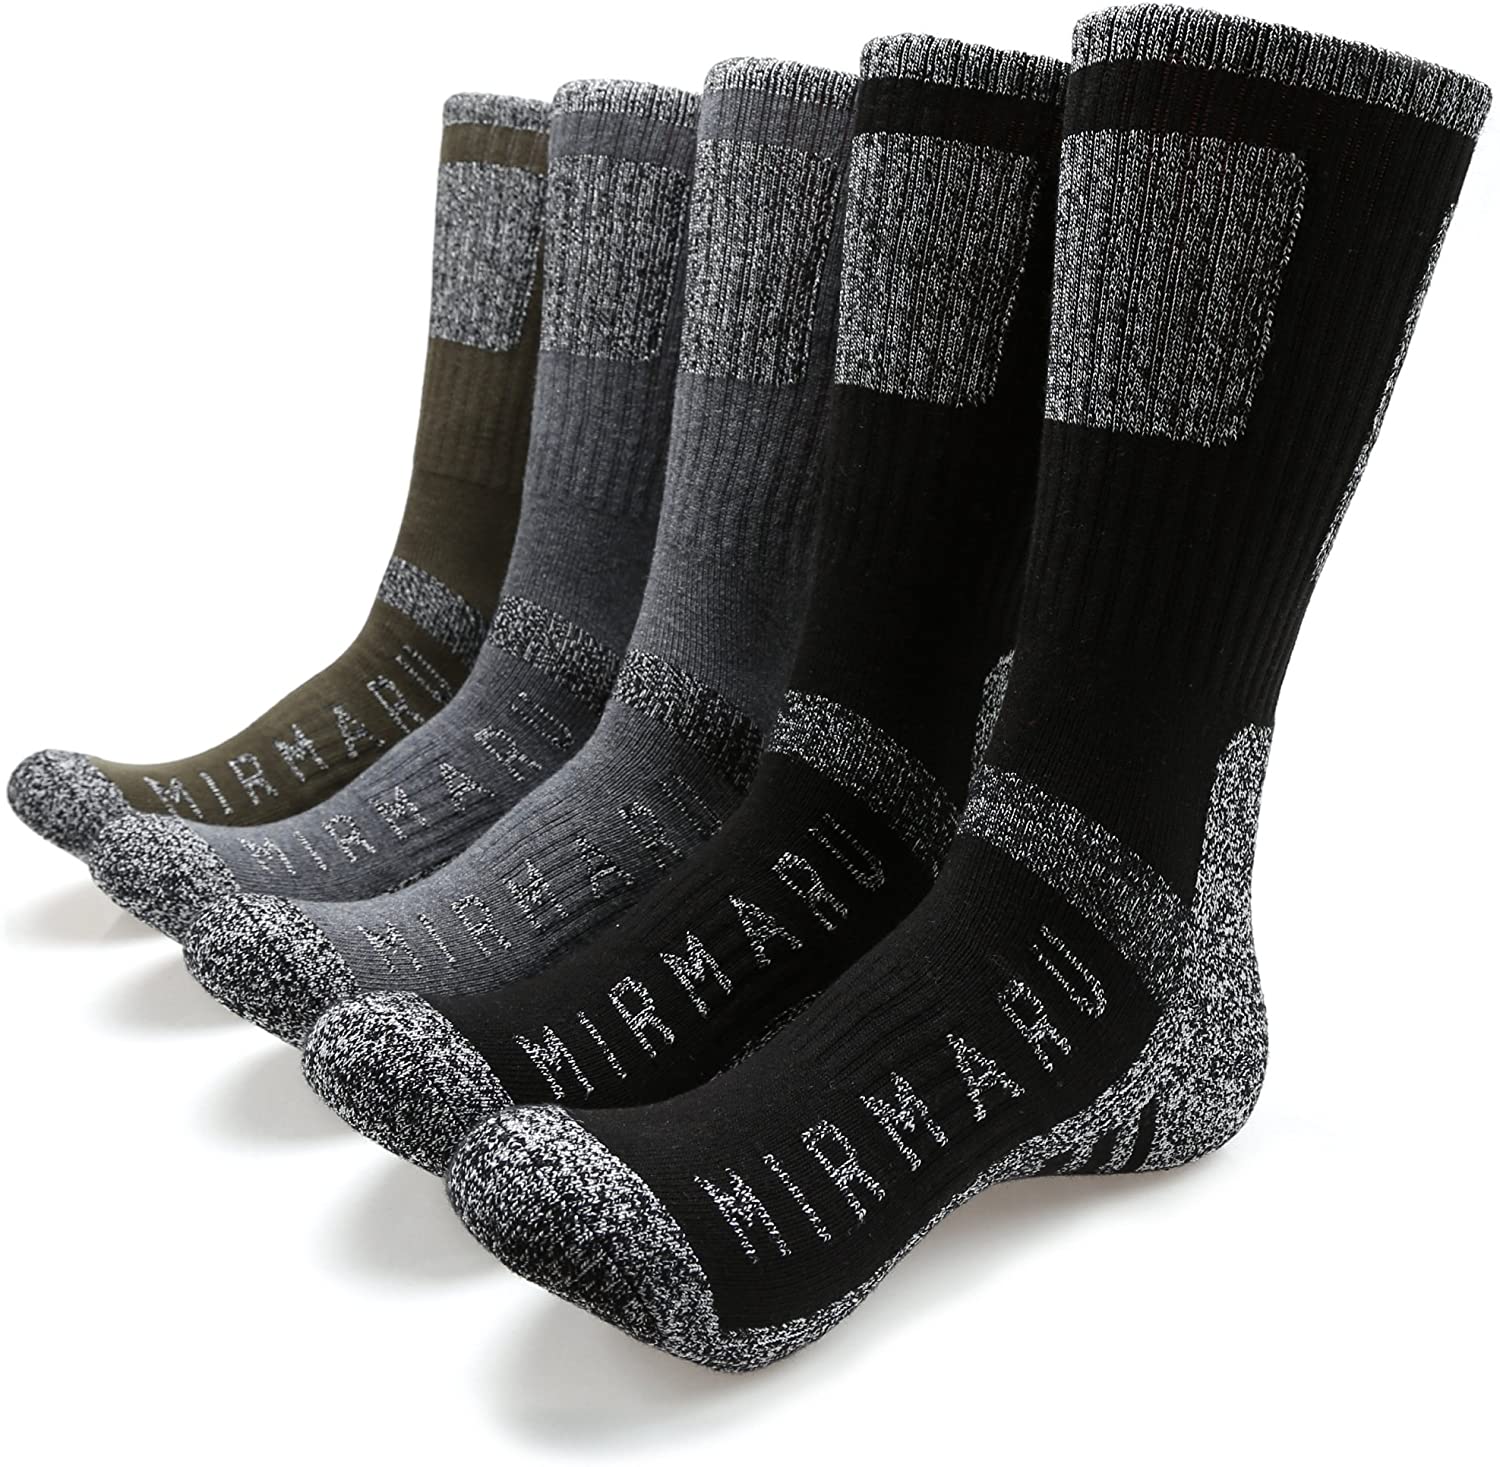 Mens Hiking Socks Work Boot Socks w/Anti-Blister-Odor Moisture Wicking Germanium & Coolmax Lite-Compression 1/2 pairs